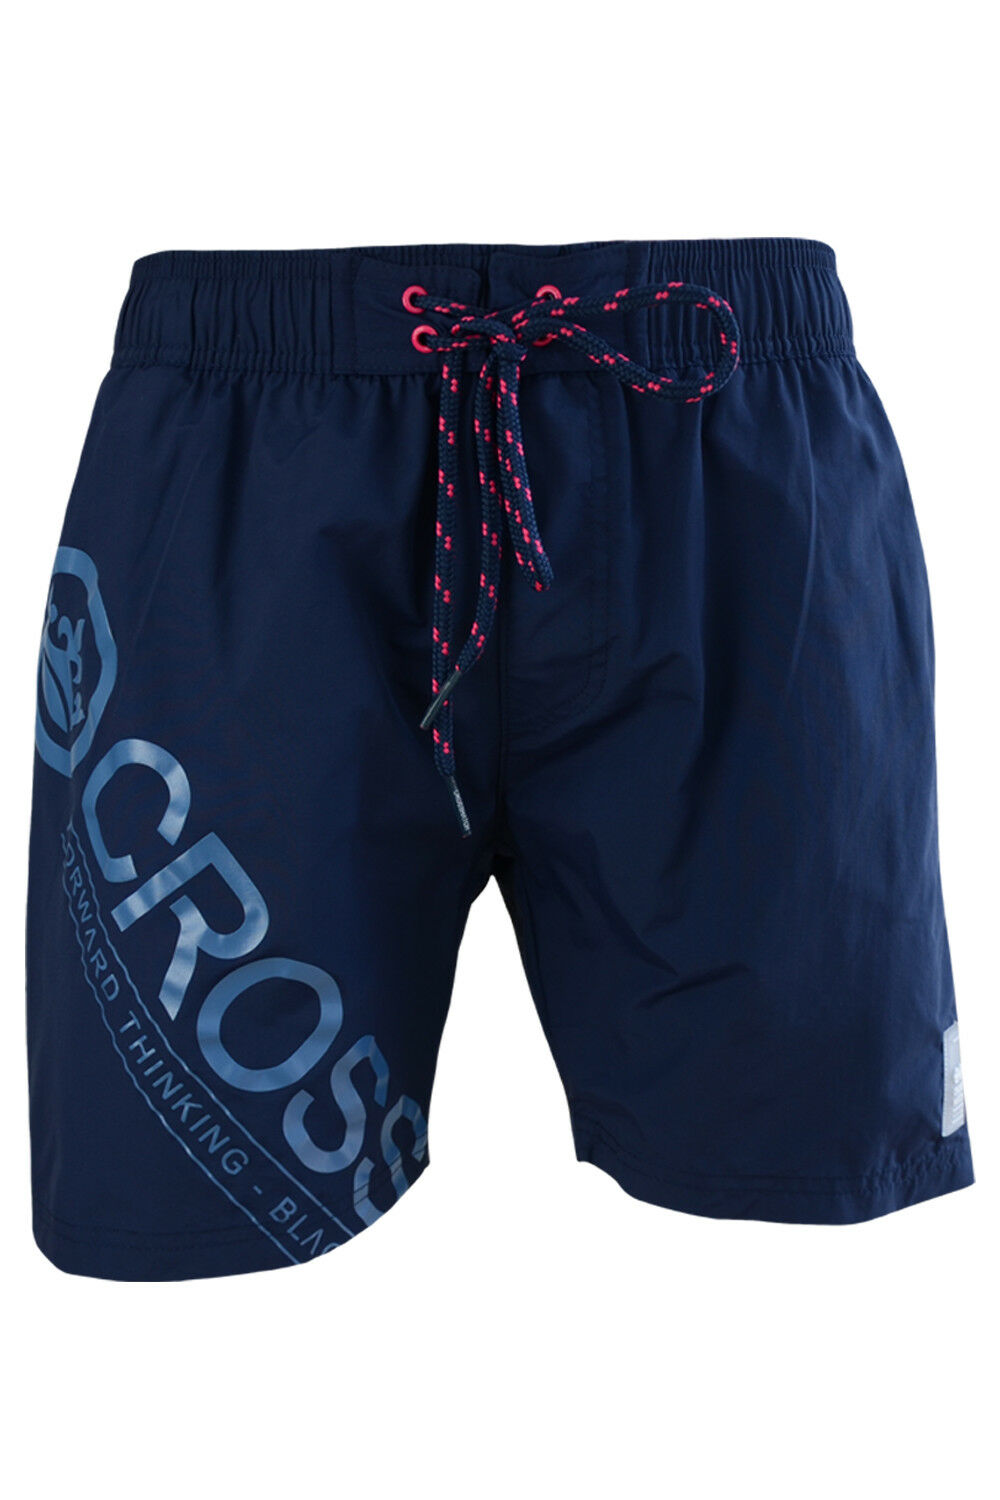 Download Crosshatch Mens Pacific Navy Blue Swim Shorts Poolside ...